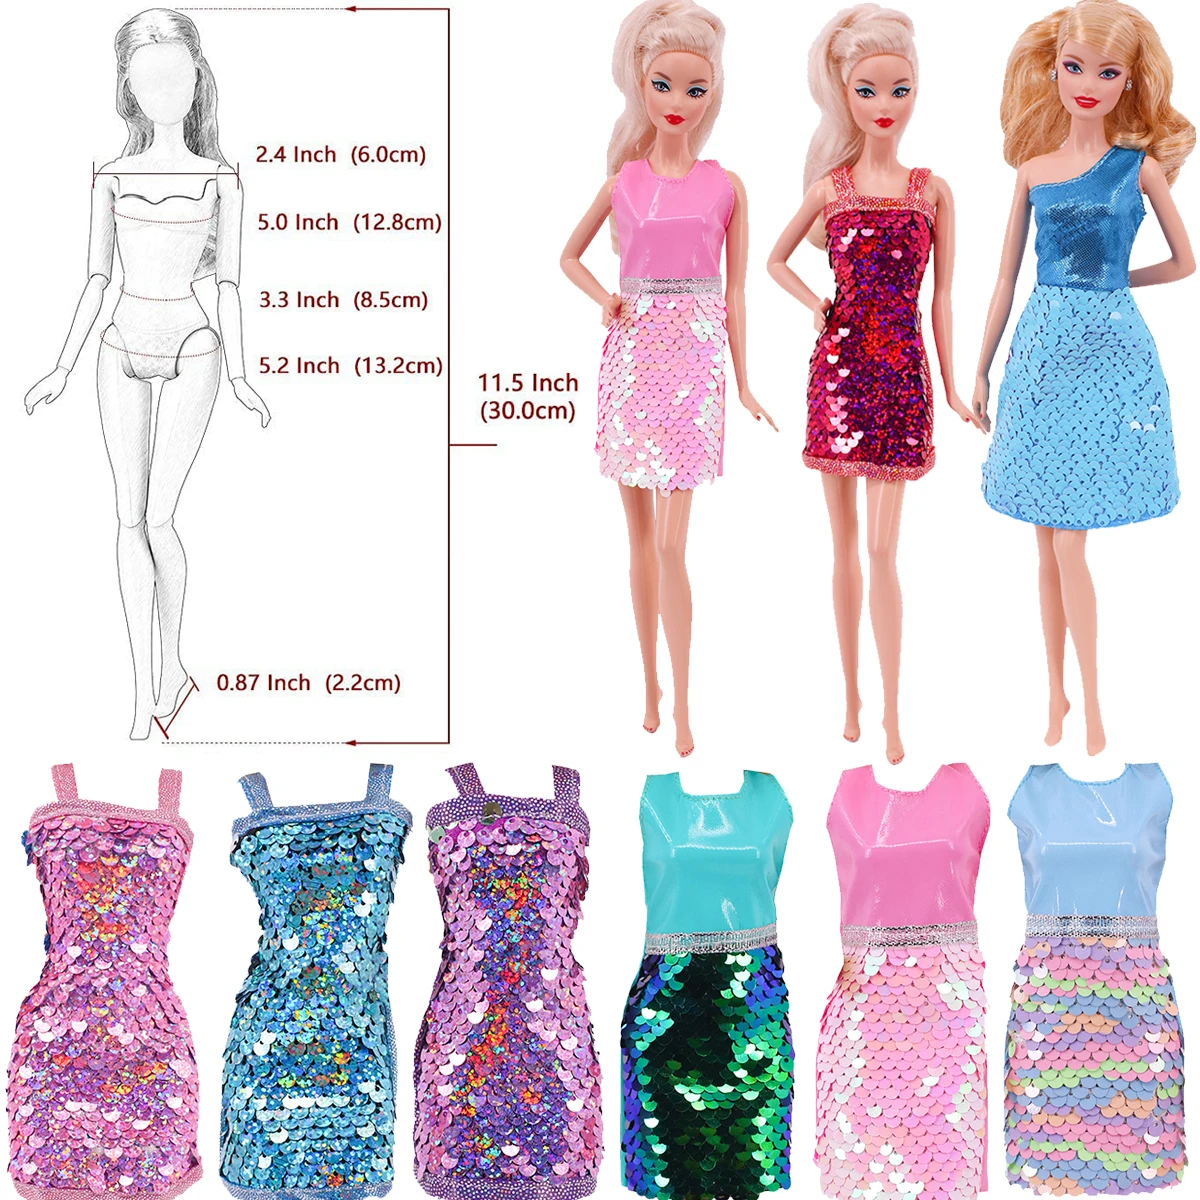 Vertrek naar buitenaards wezen Klimatologische bergen Barbie Fashion Dolls Accessories | Barbie Doll Accessories Clothes - Doll  Party - Aliexpress